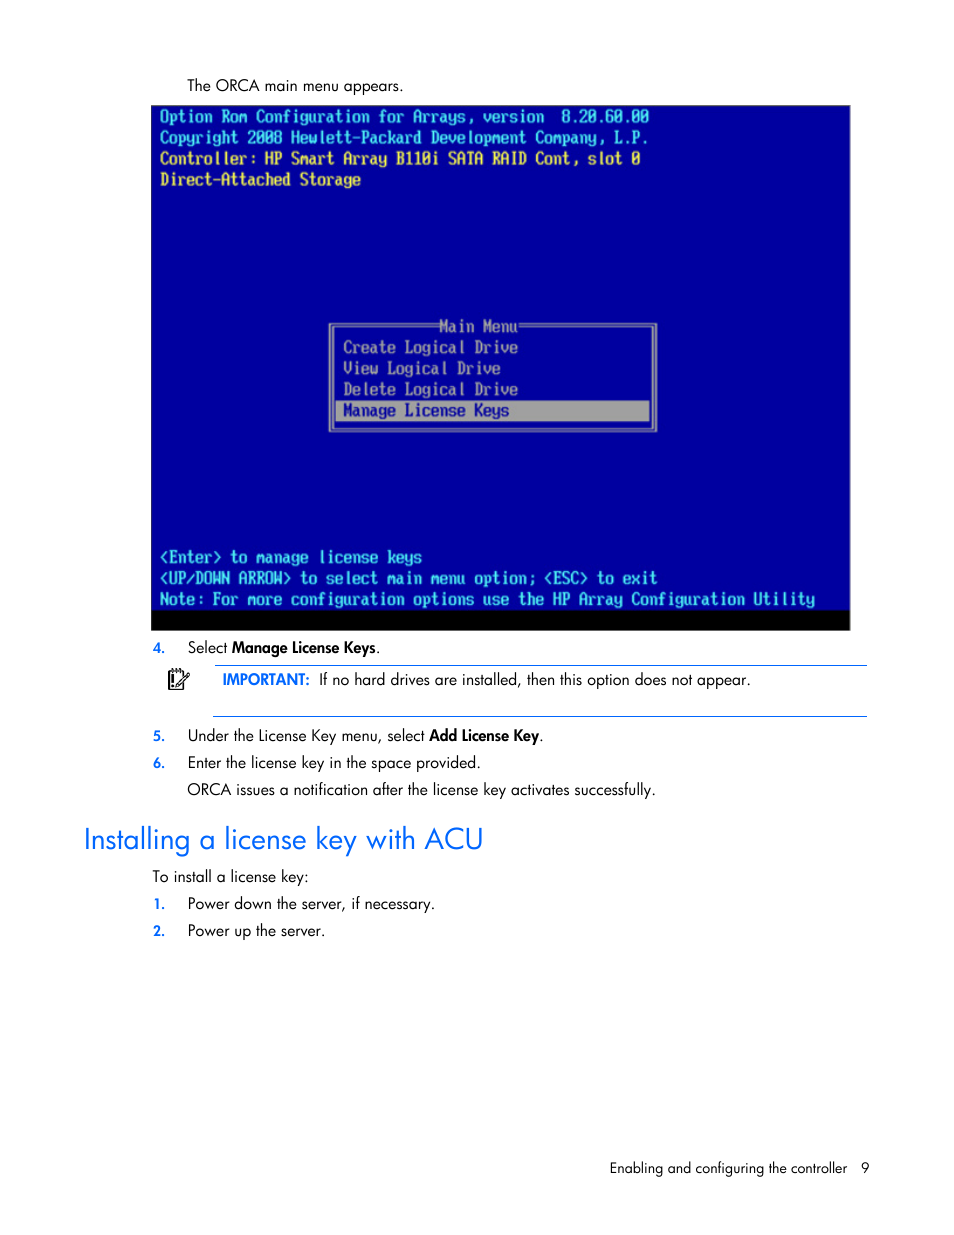 Installing a license key with acu | HP Smart Array B110i SATA RAID- Controller User Manual | Page 9 / 27